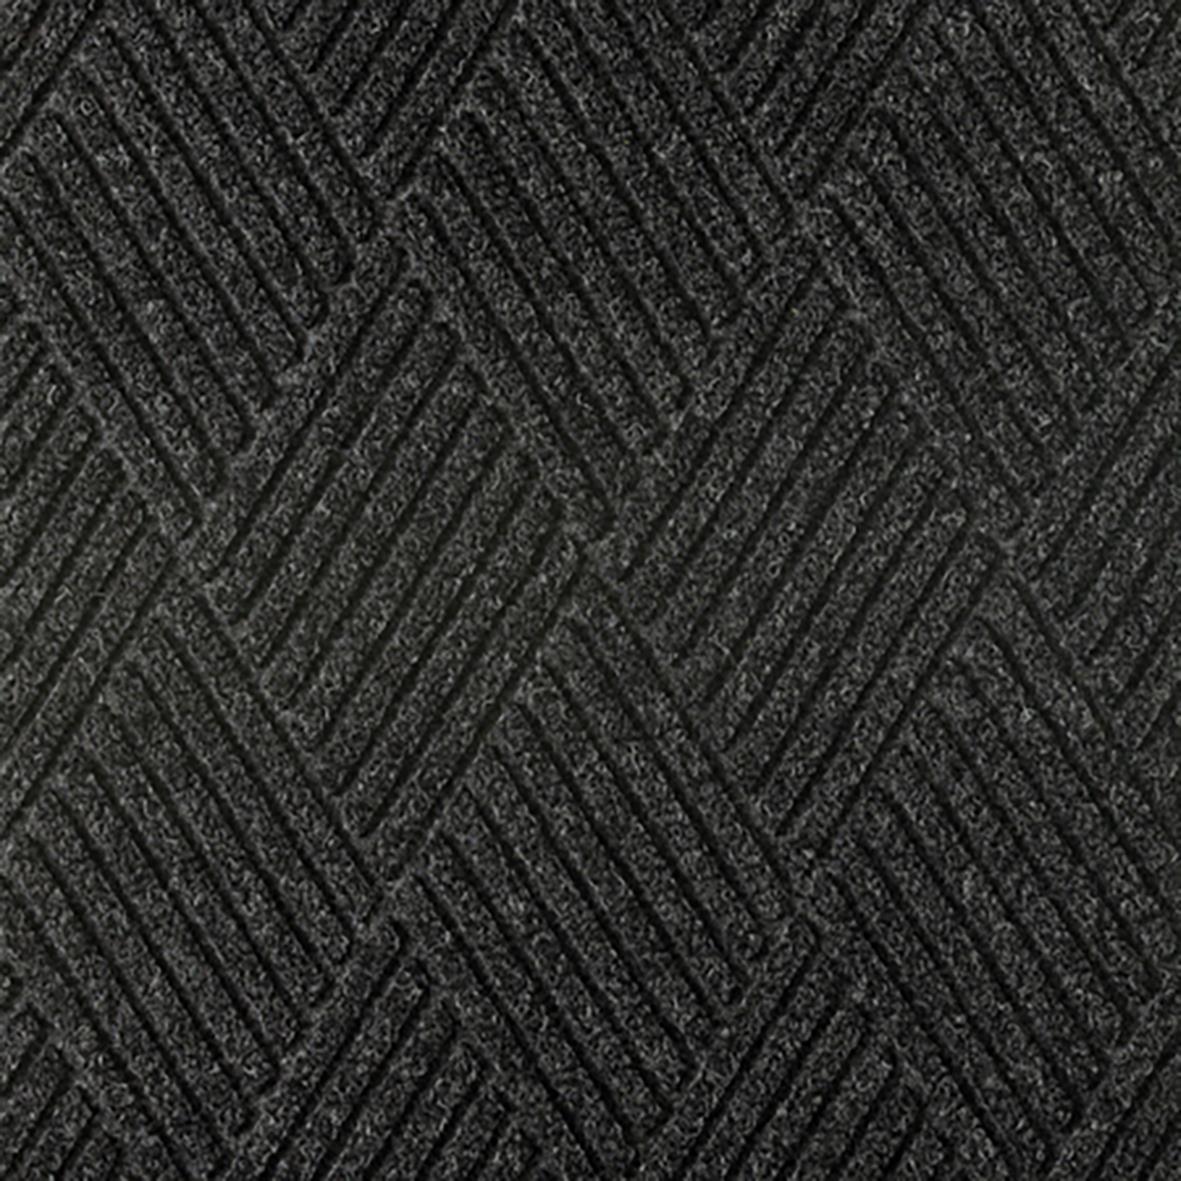 Kombinationsmatta Matting Combi Premier svart 85x150cm 71100019_1